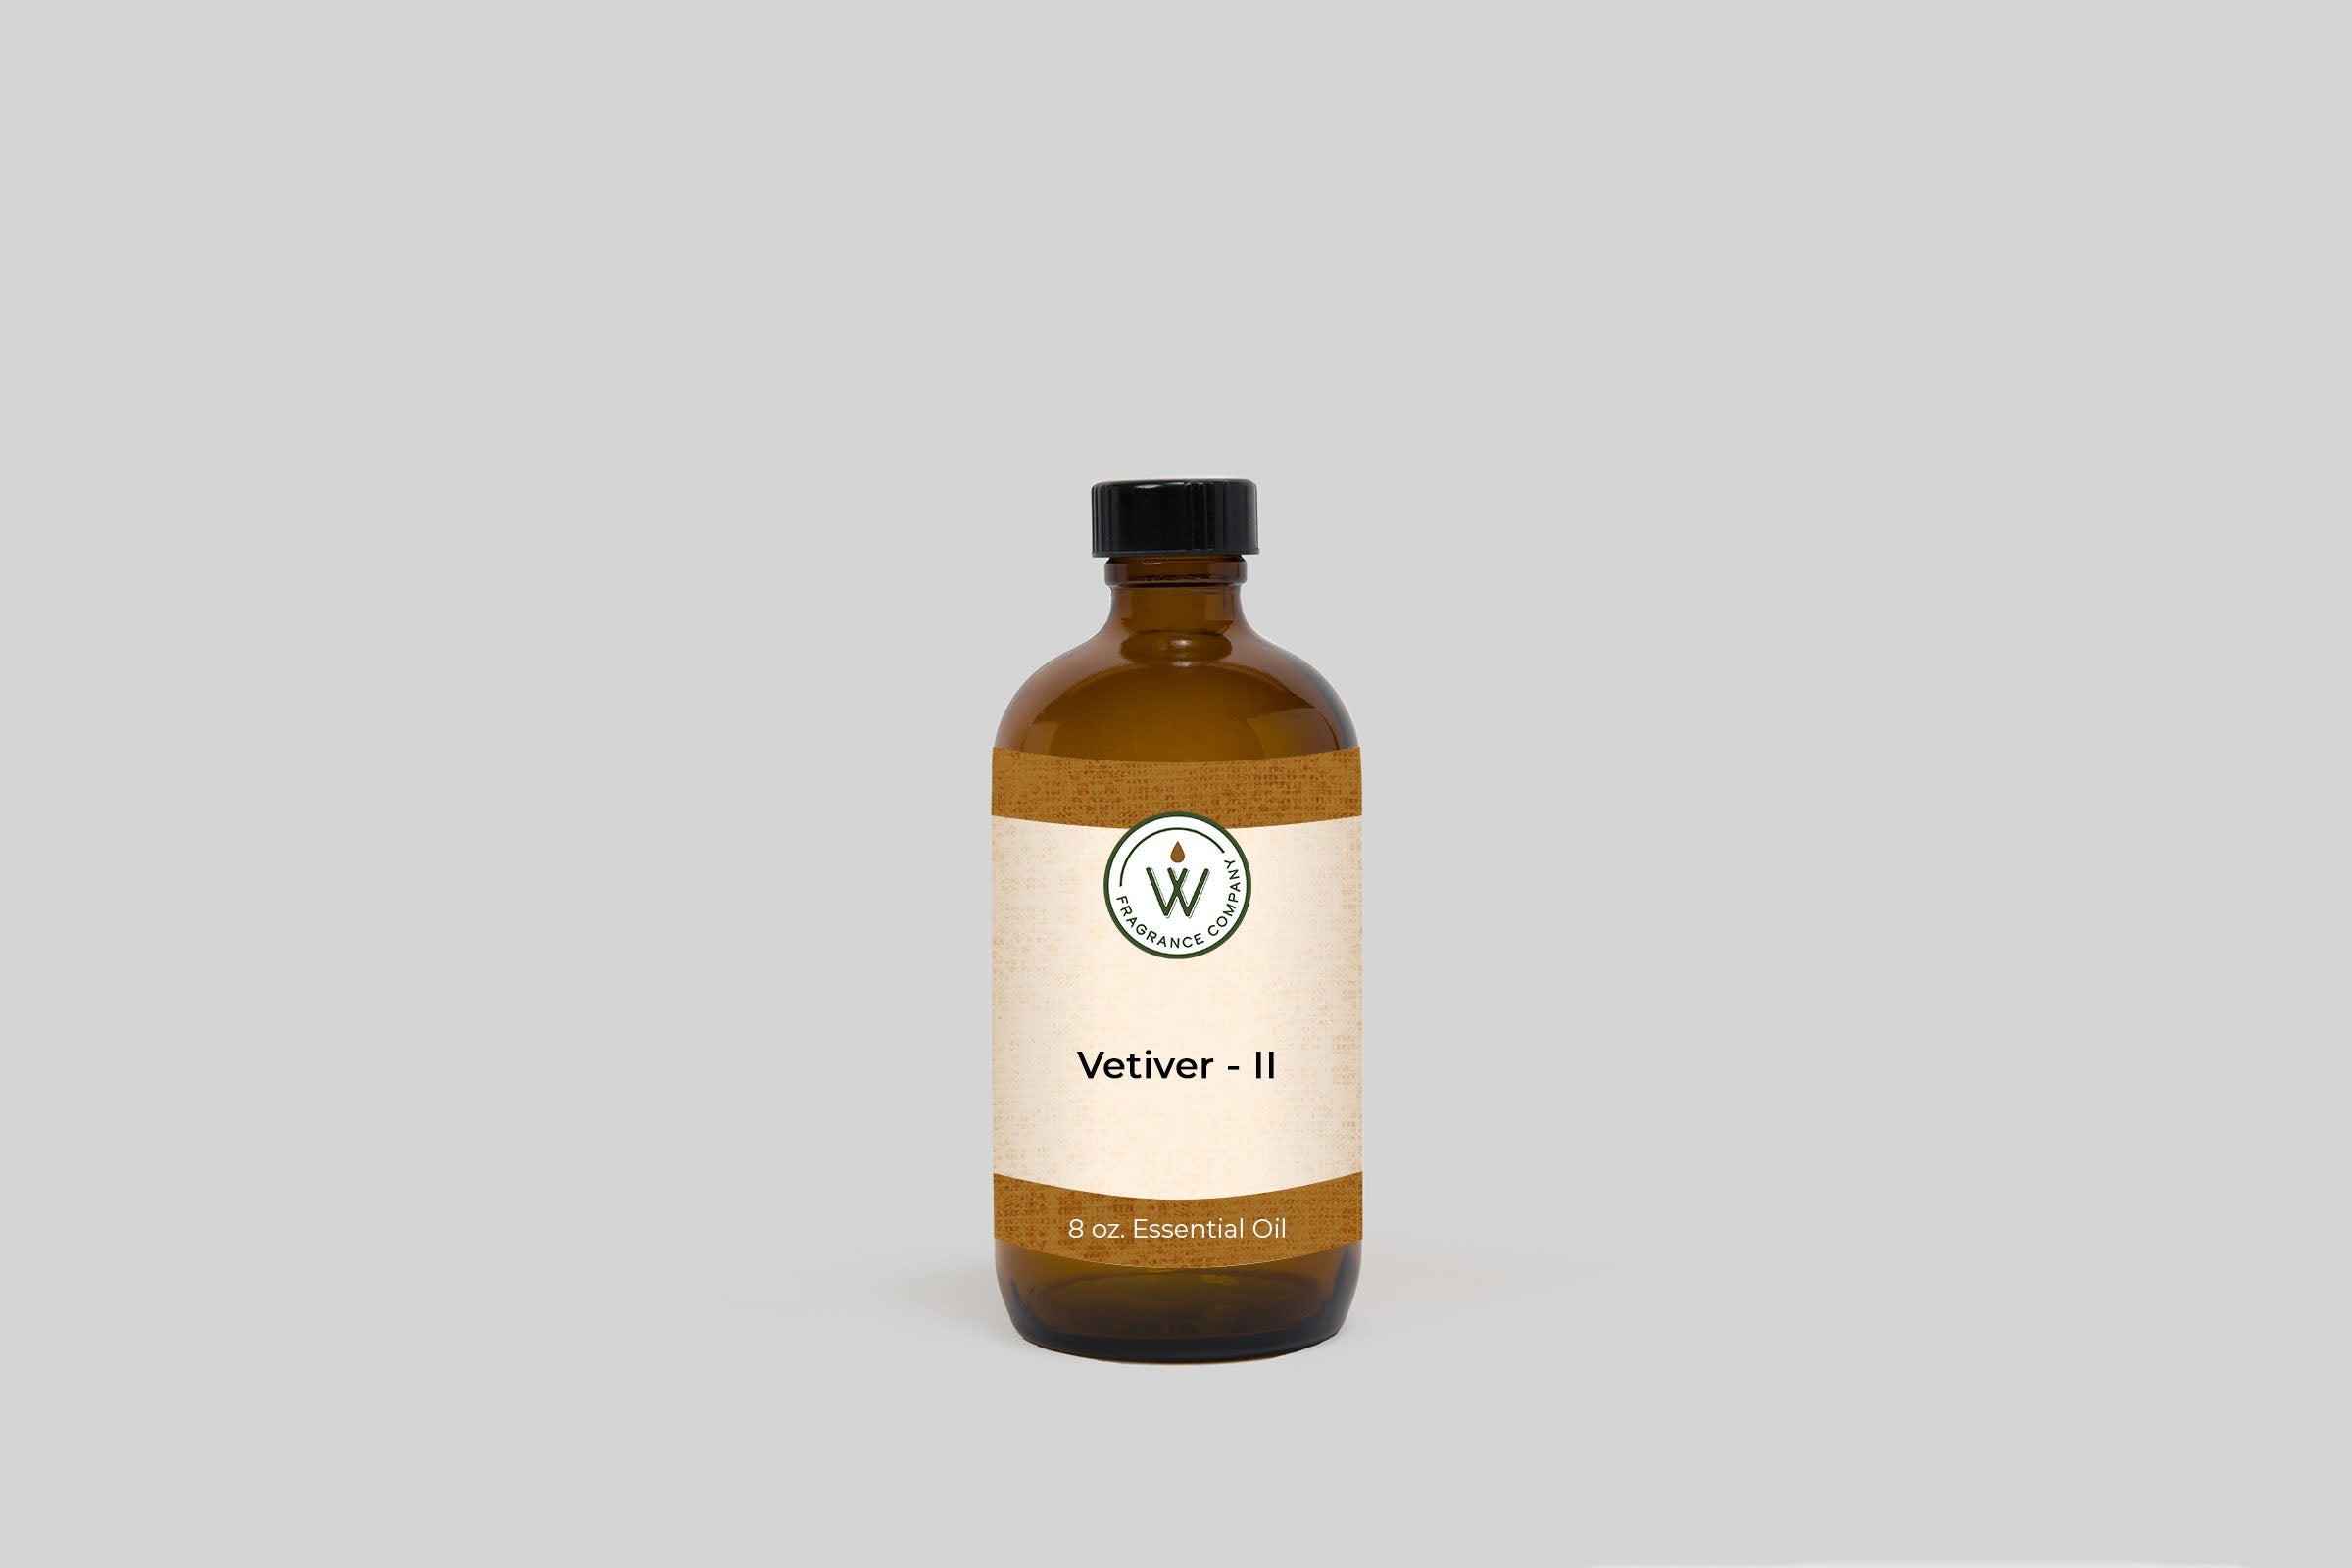 Vetiver - II Essential Oil